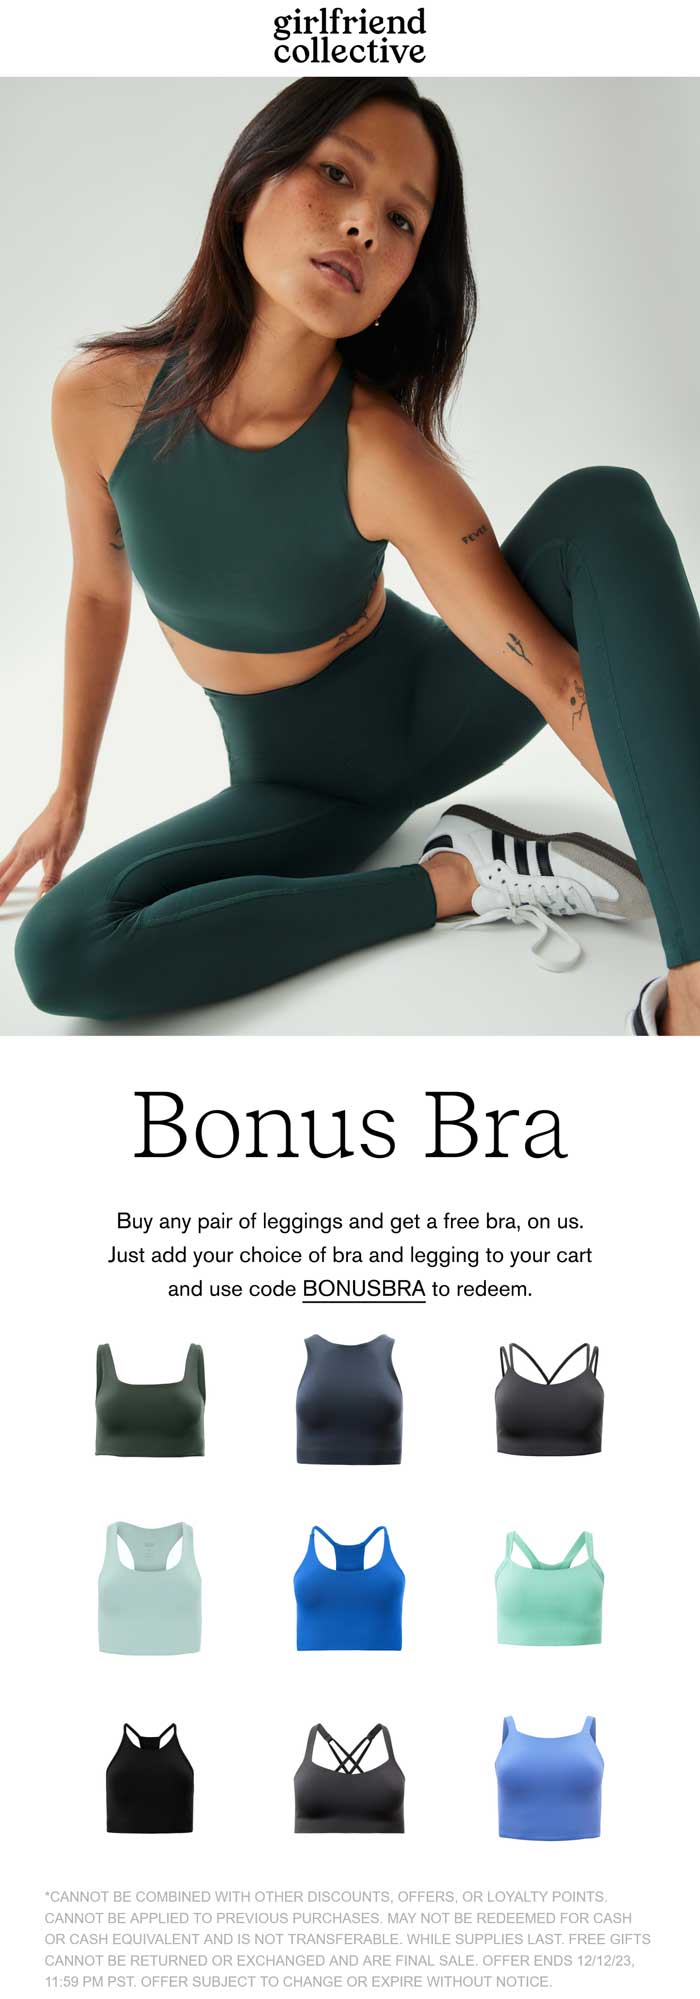 Girlfriend Collective stores Coupon  Free bra with your leggings at Girlfriend Collective via promo code BONUSBRA #girlfriendcollective 